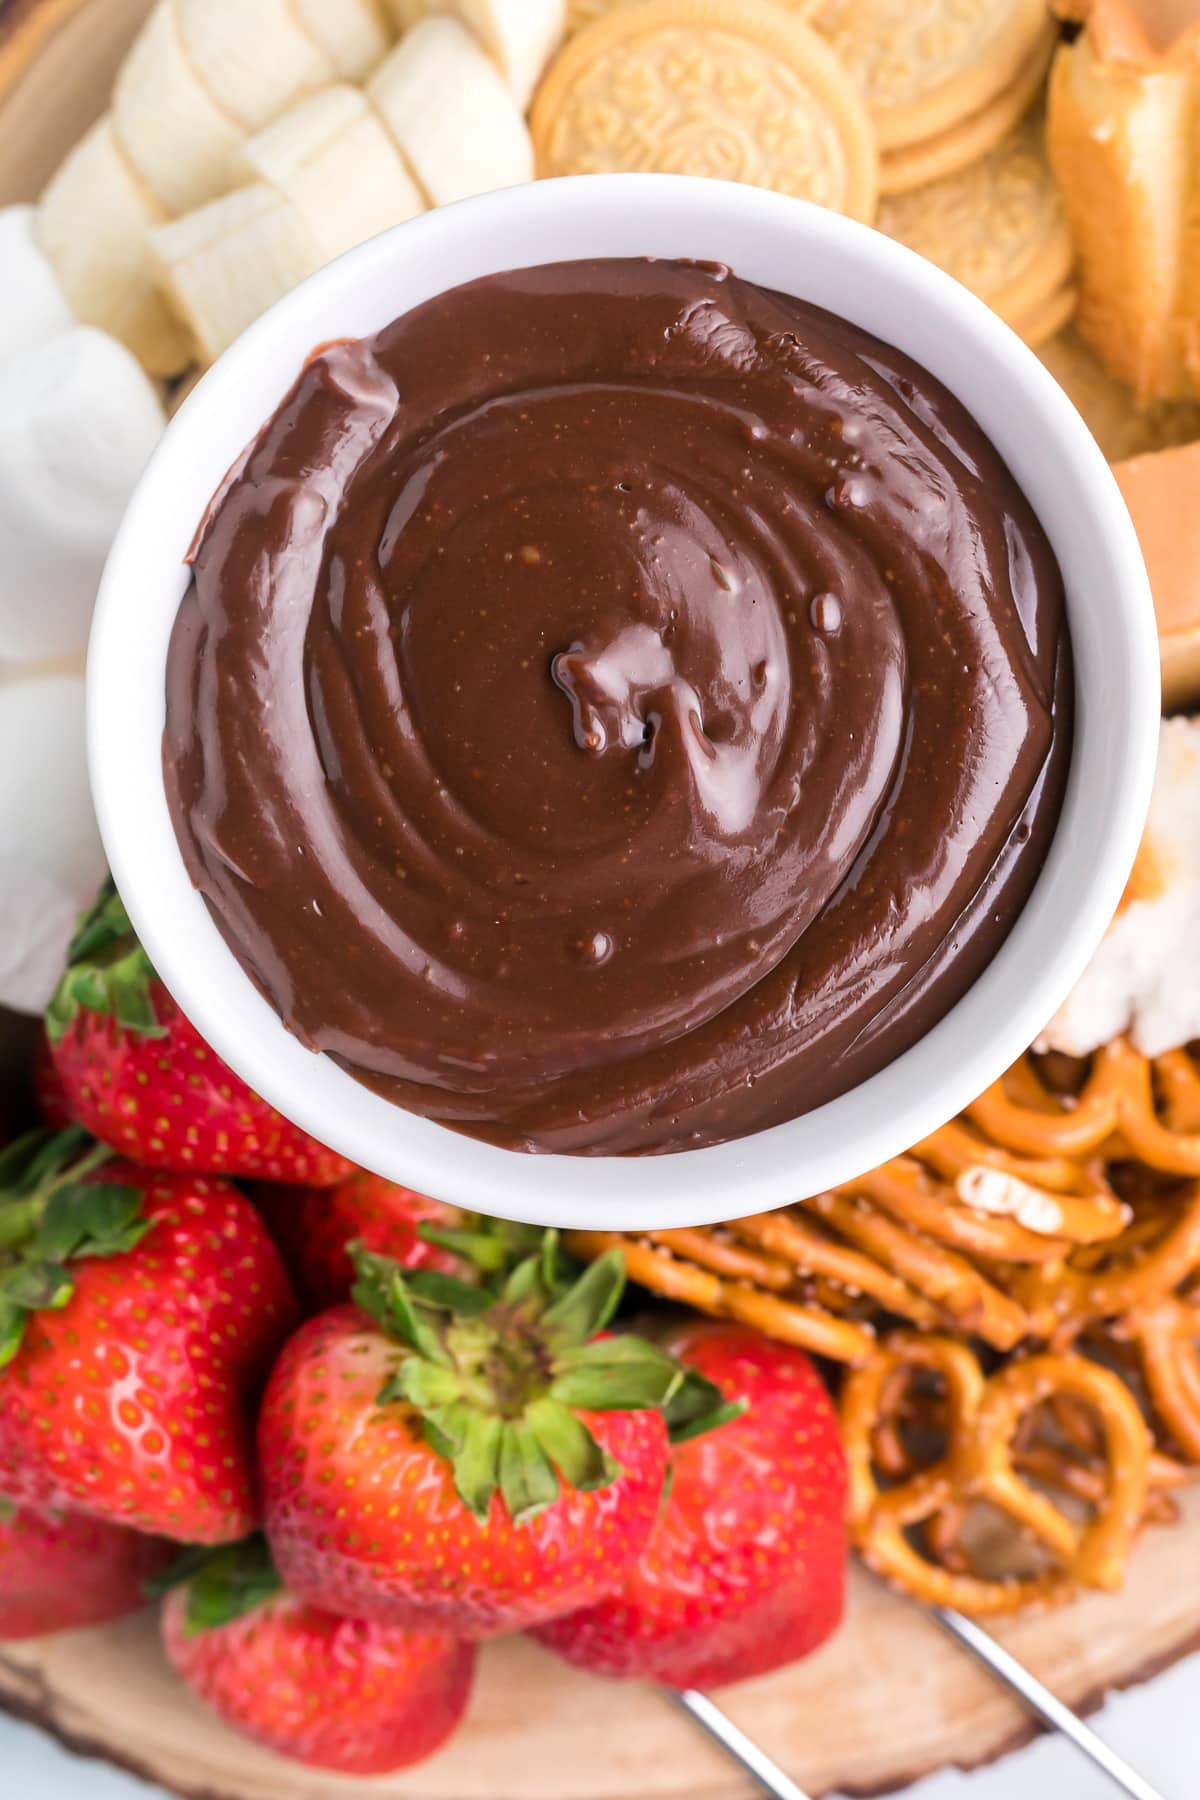 Chocolate fondue in a white bowl.